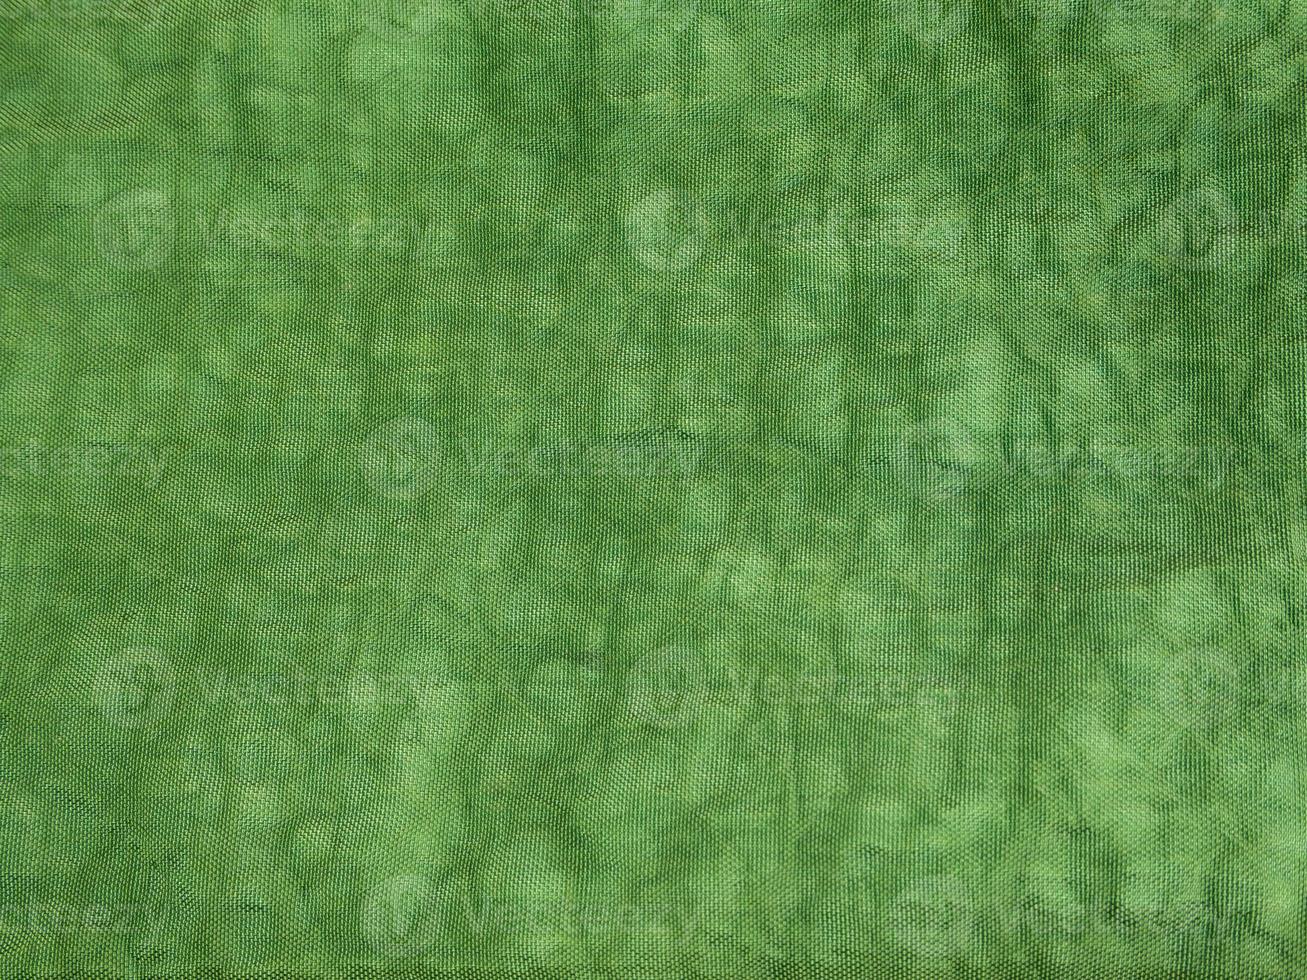 oppervlaktetextuur van groene kleur en verfrommelde canvasstof foto